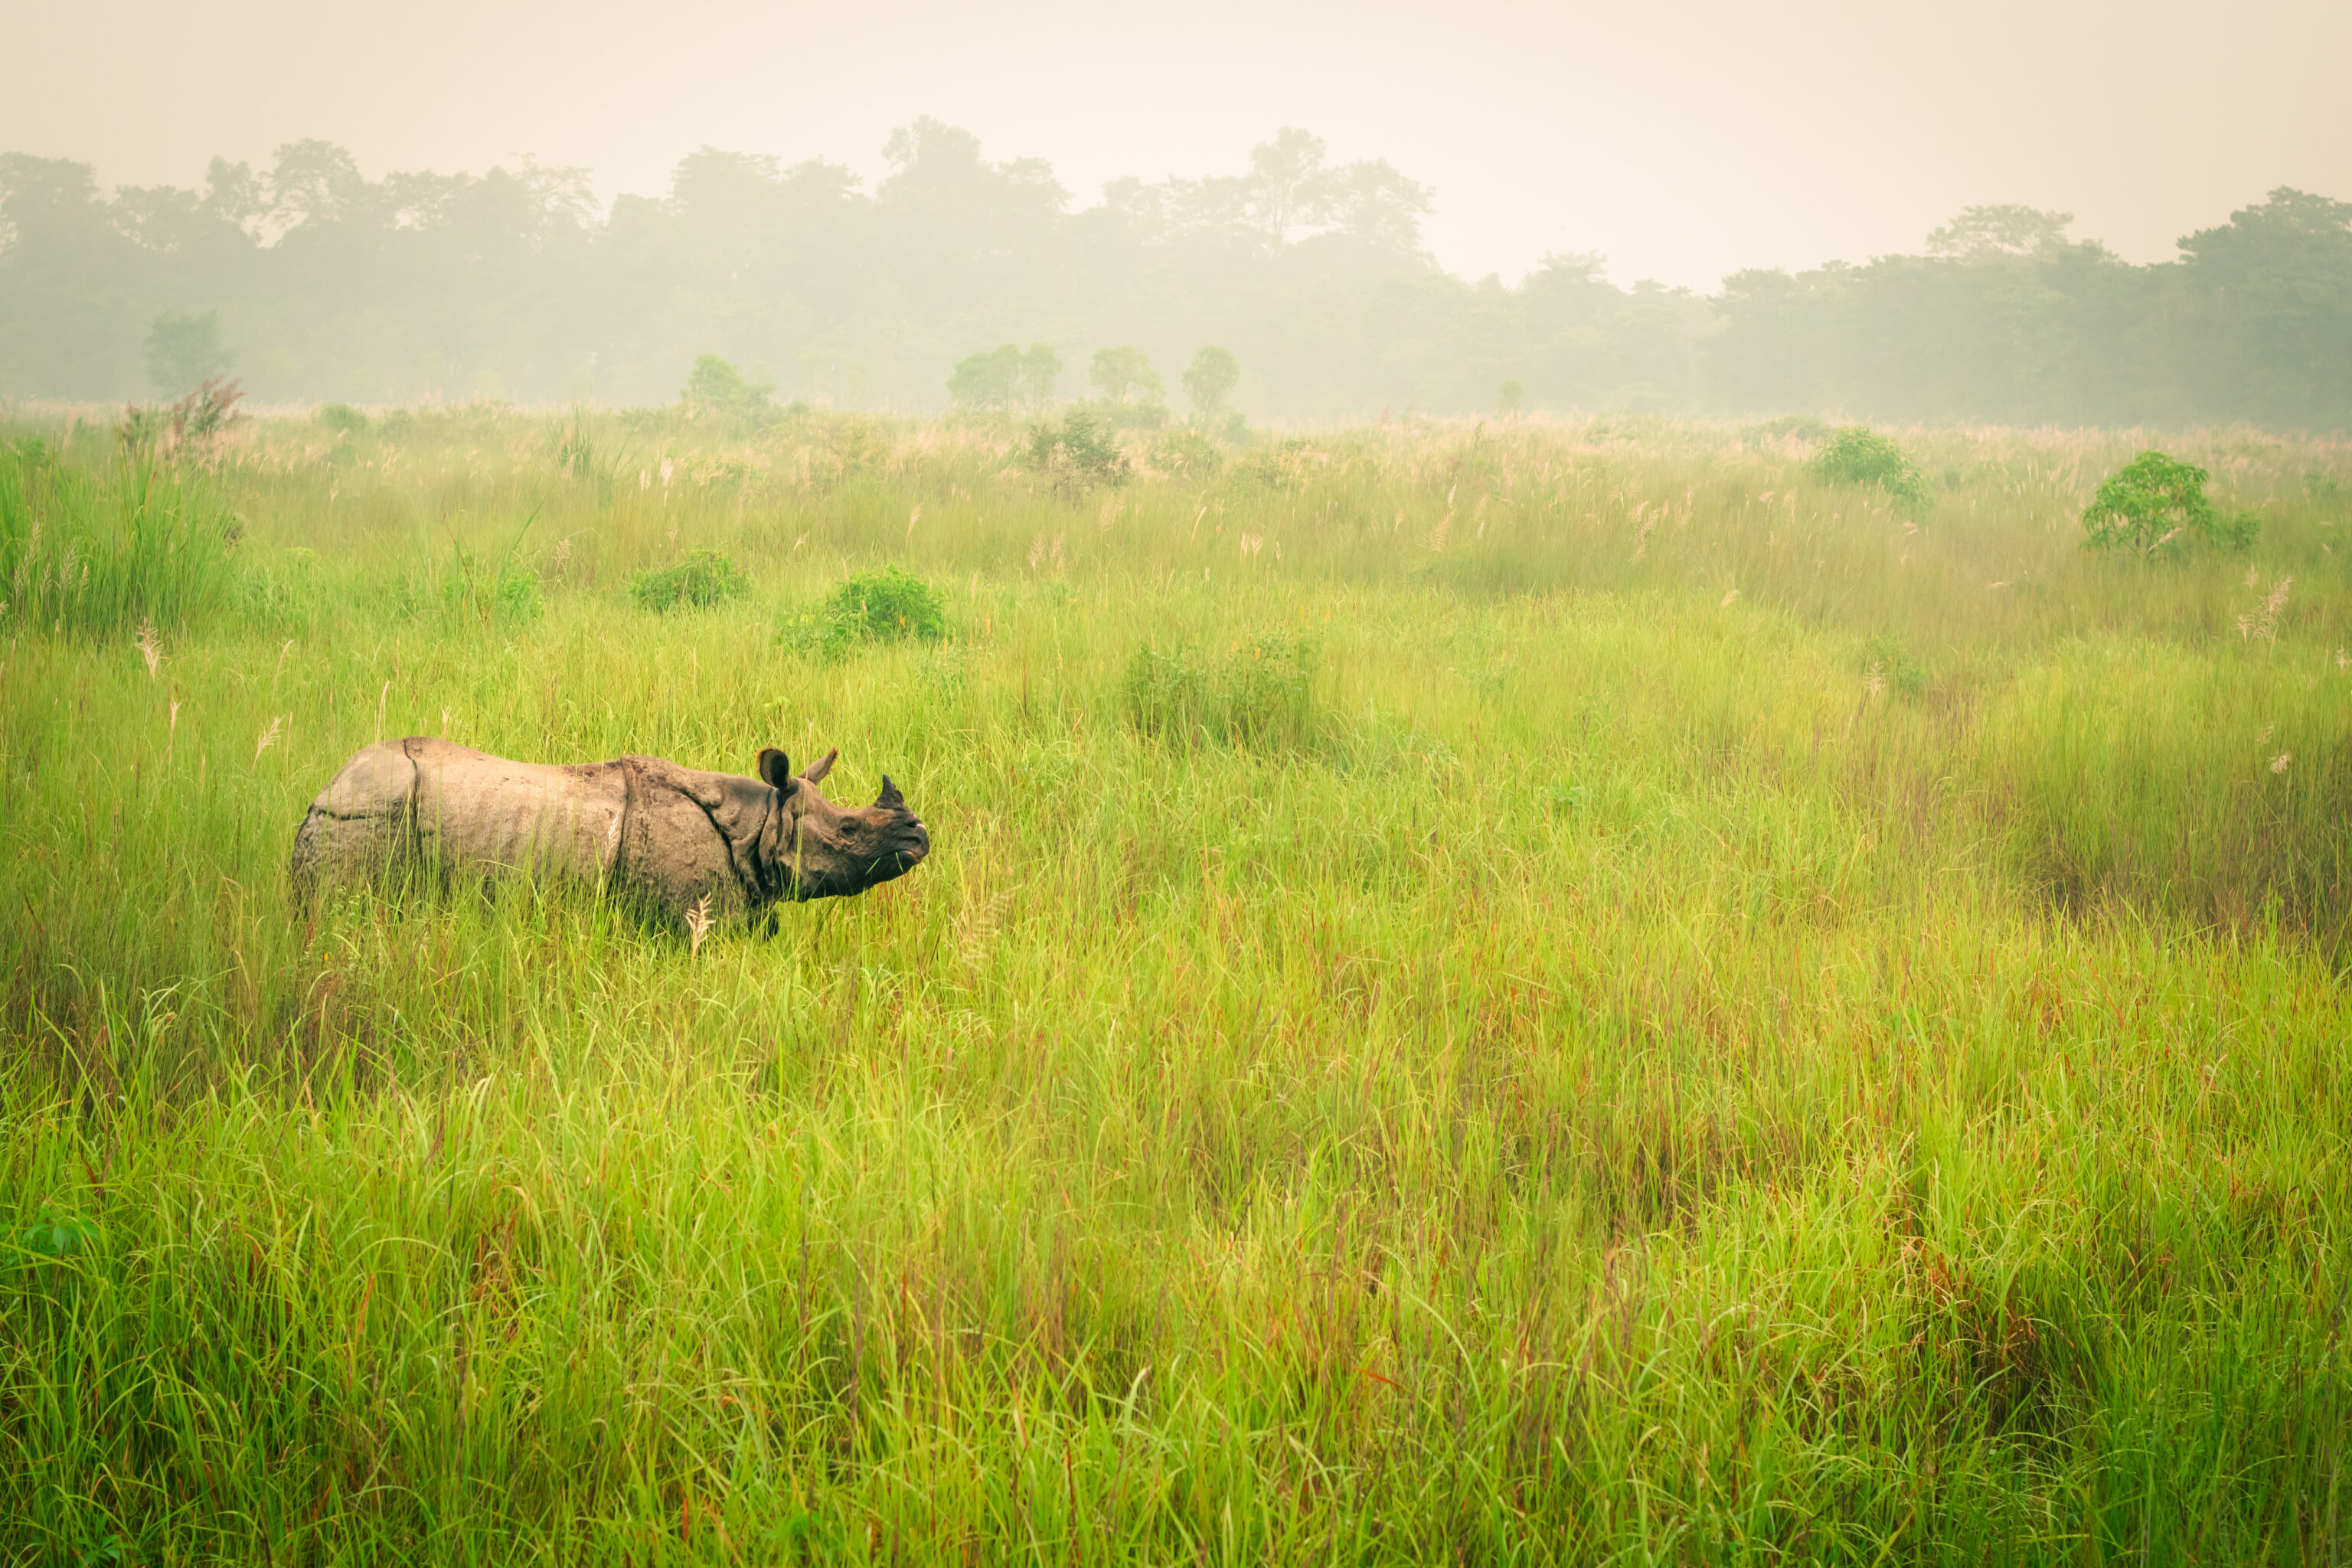 Wild,Endangered,One-horn,Rhinoceros,Grazing,In,A,Grass,Field,In